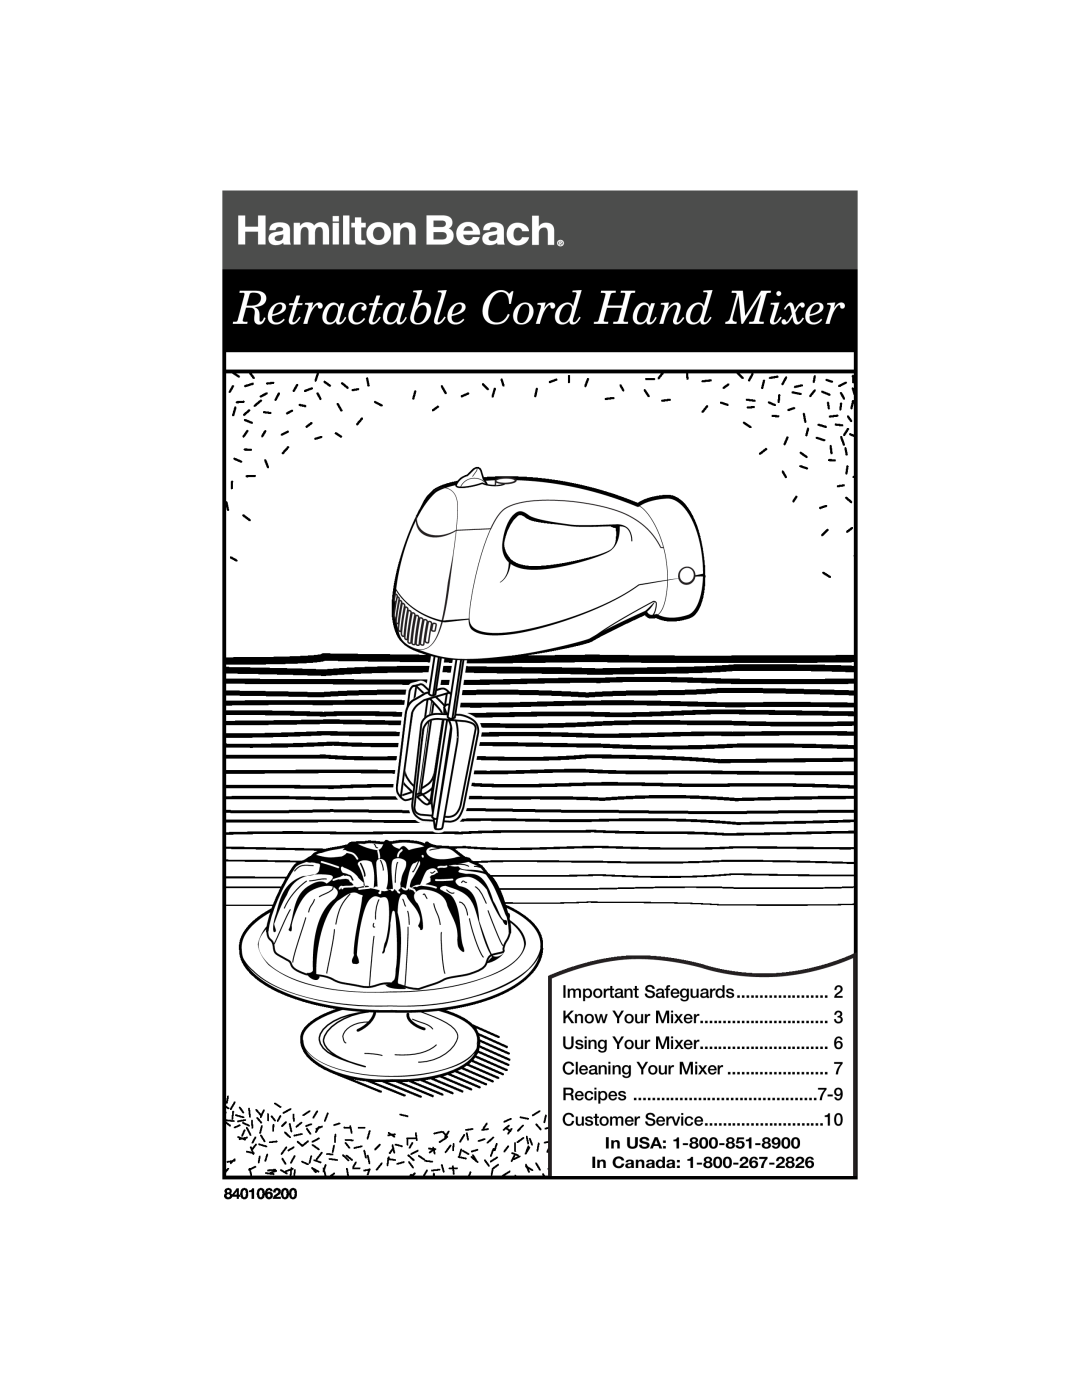 Hamilton Beach 840106200 manual Retractable Cord Hand Mixer, Important Safeguards, Know Your Mixer, Using Your Mixer 